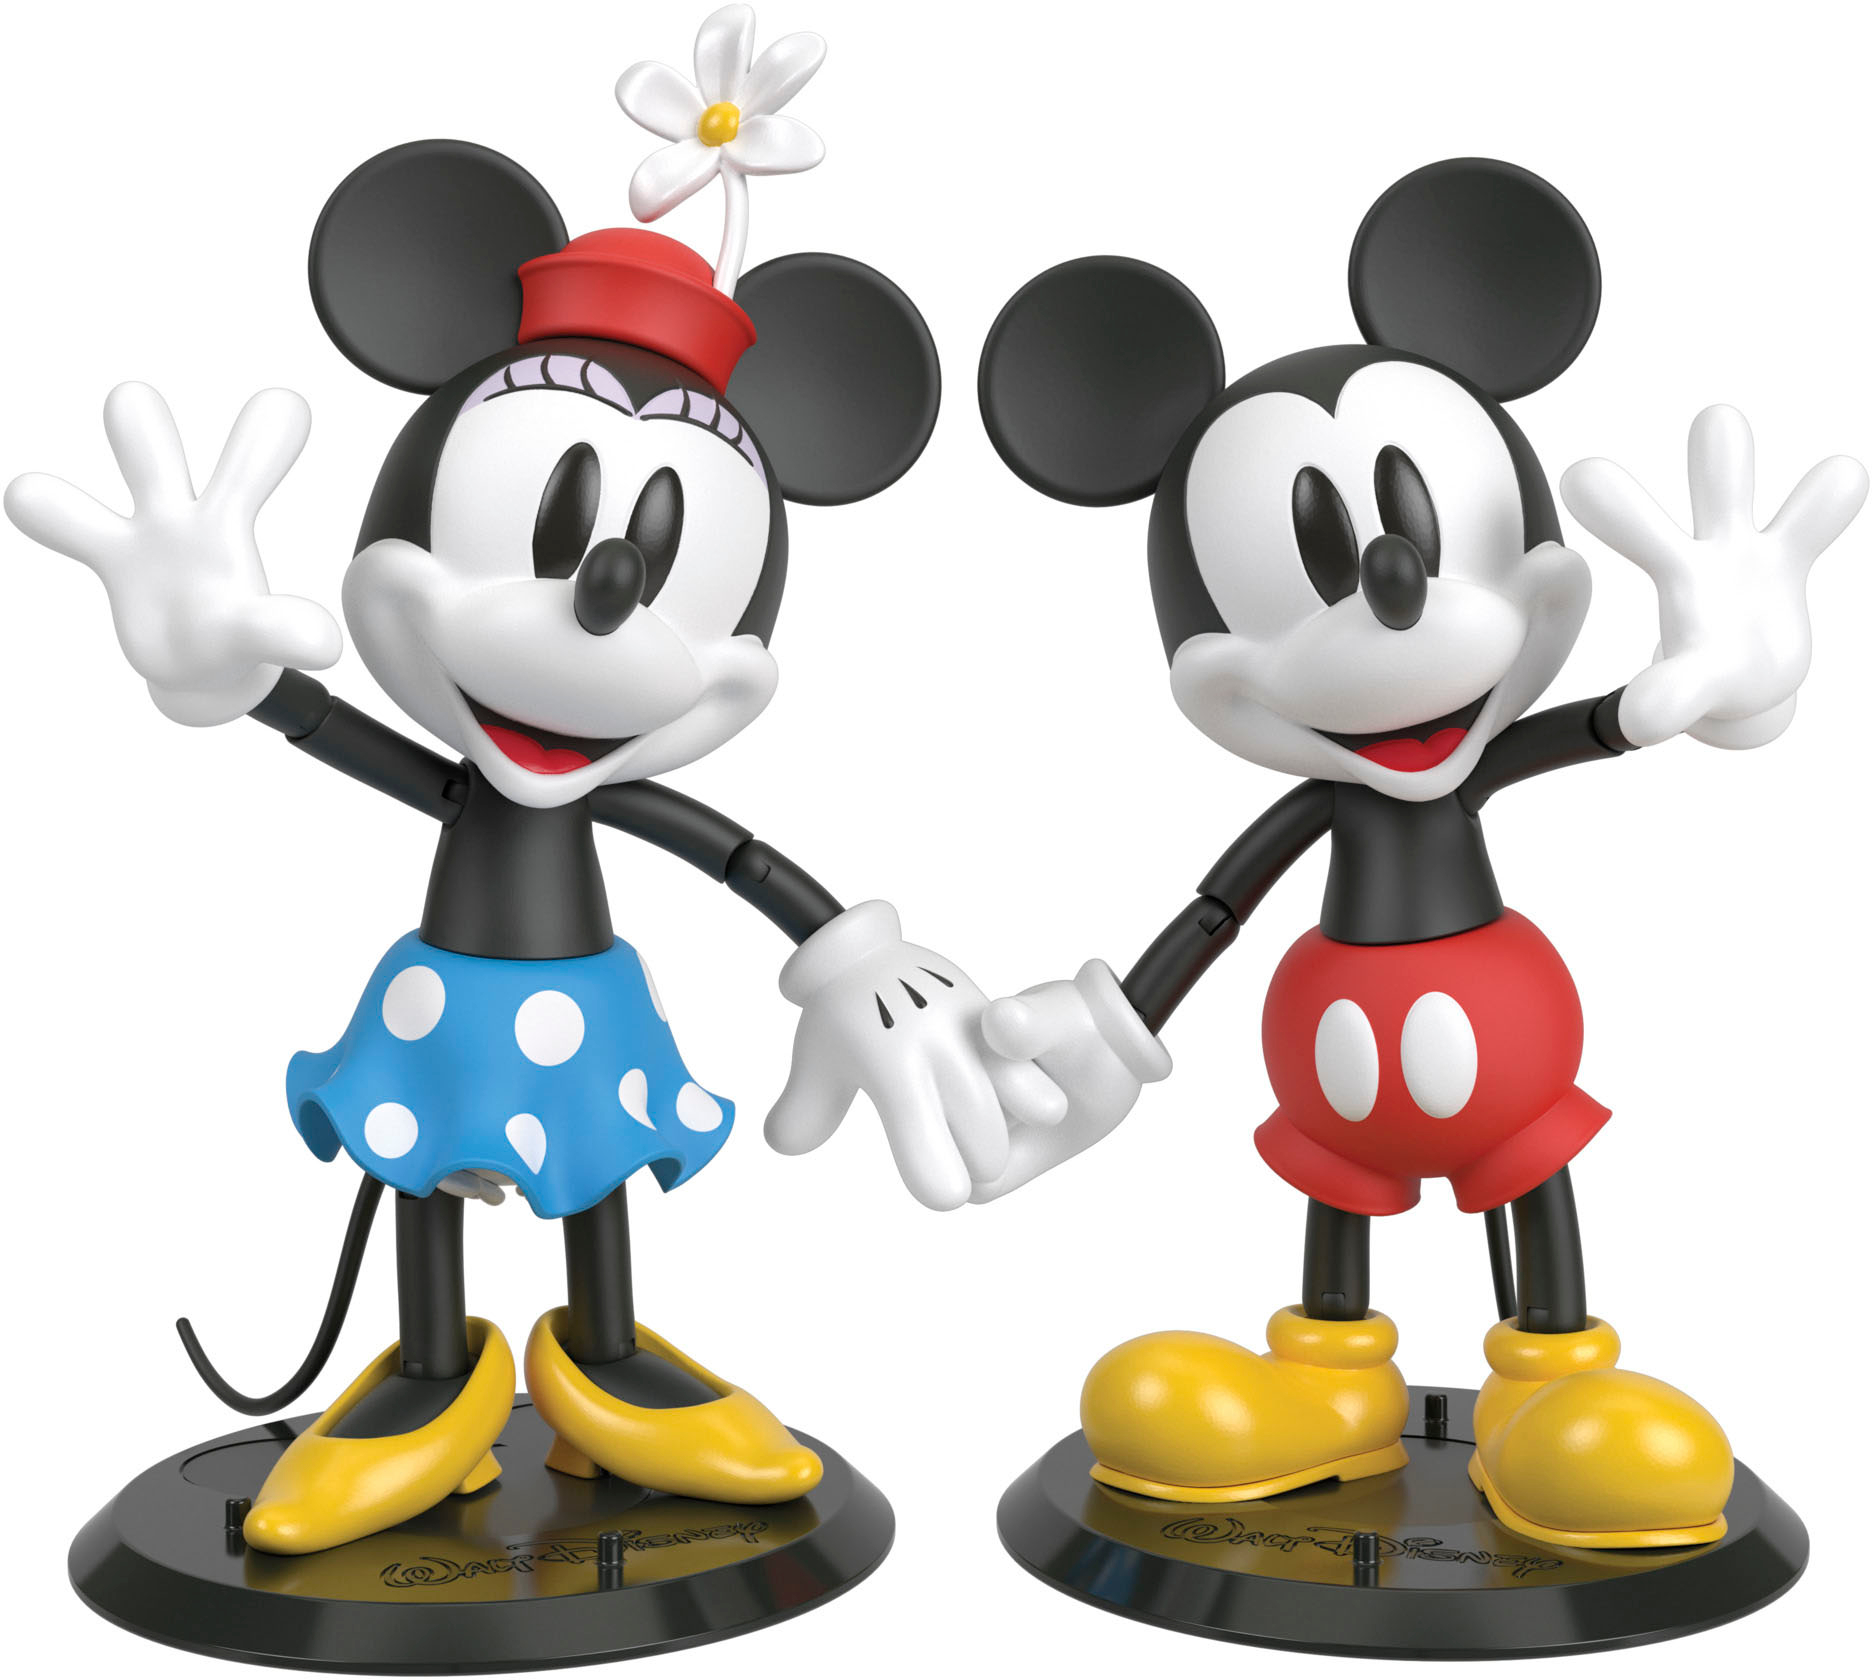 Disney D100 Celebration Pack Collectible Action Figures Minnie